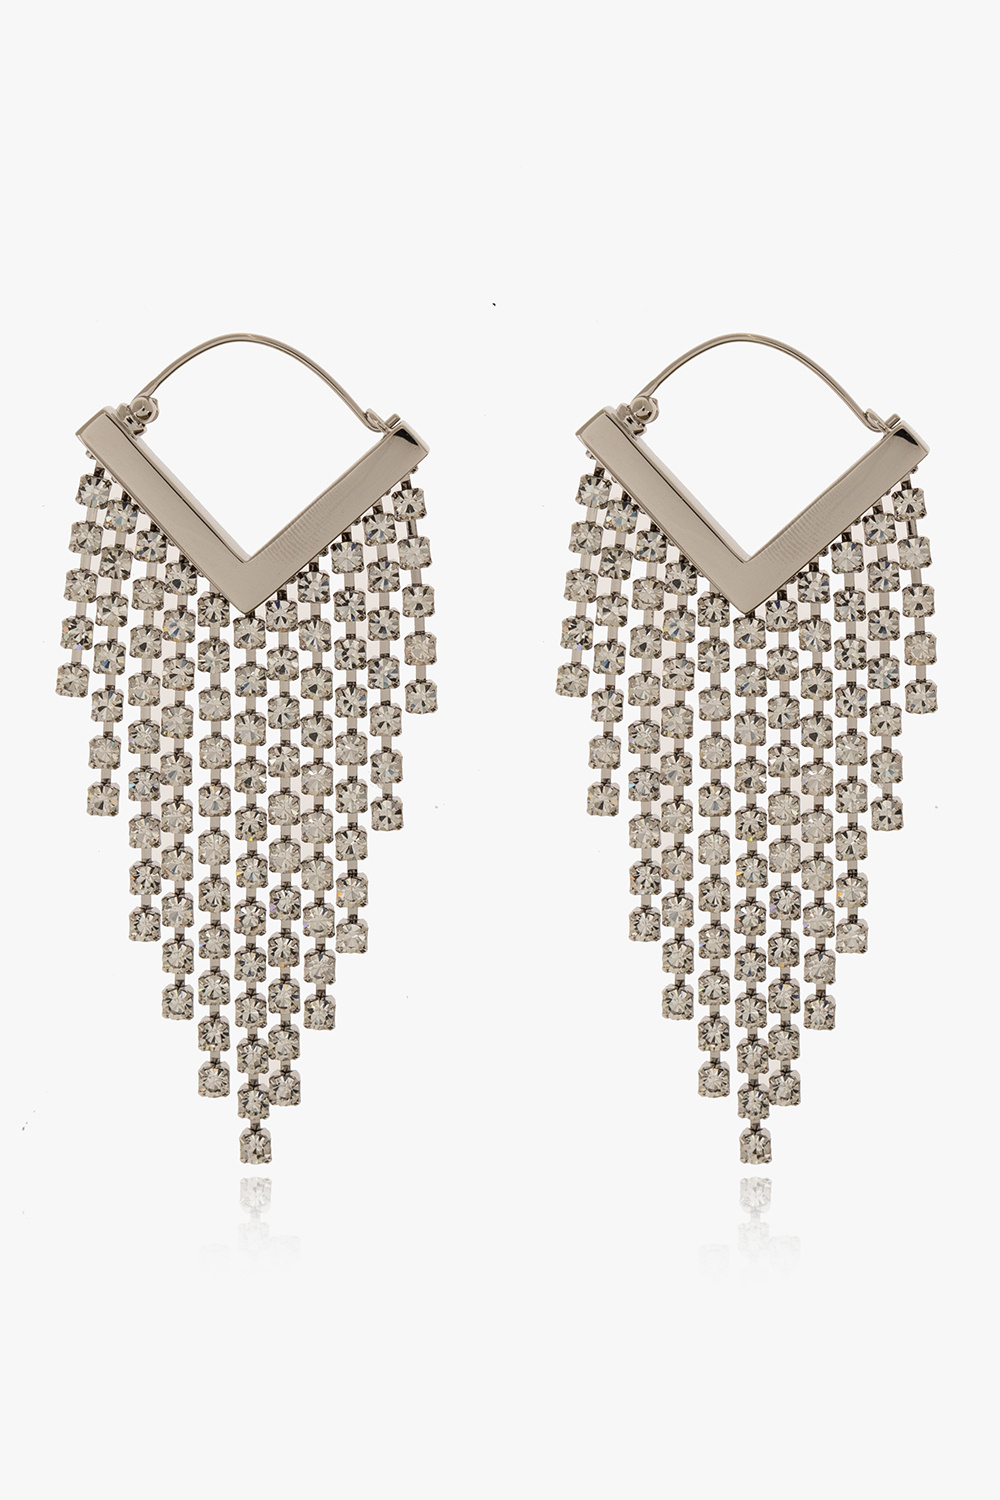 Isabel Marant Embellished earrings